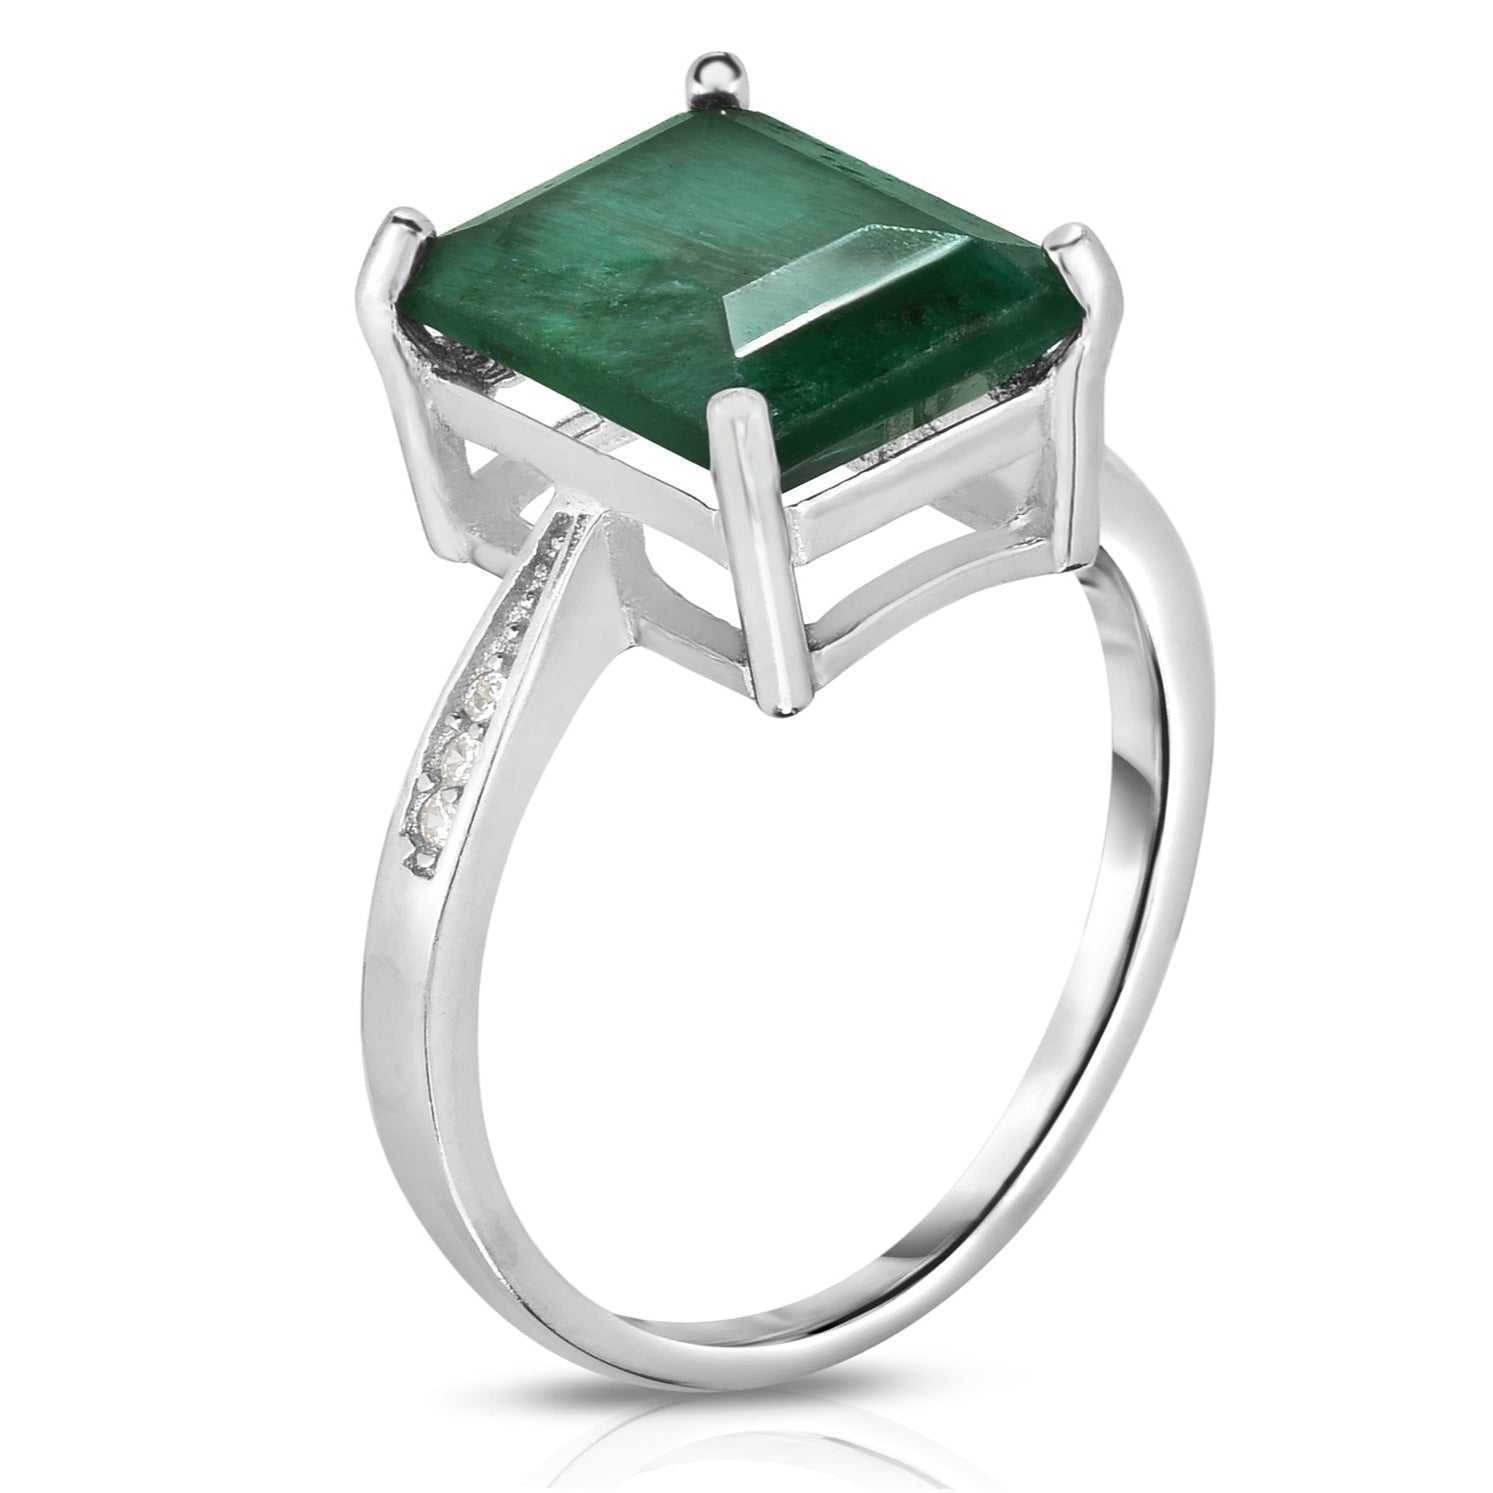 Emerald Genuine Emerald Cut Gemstone Sterling Silver Ring